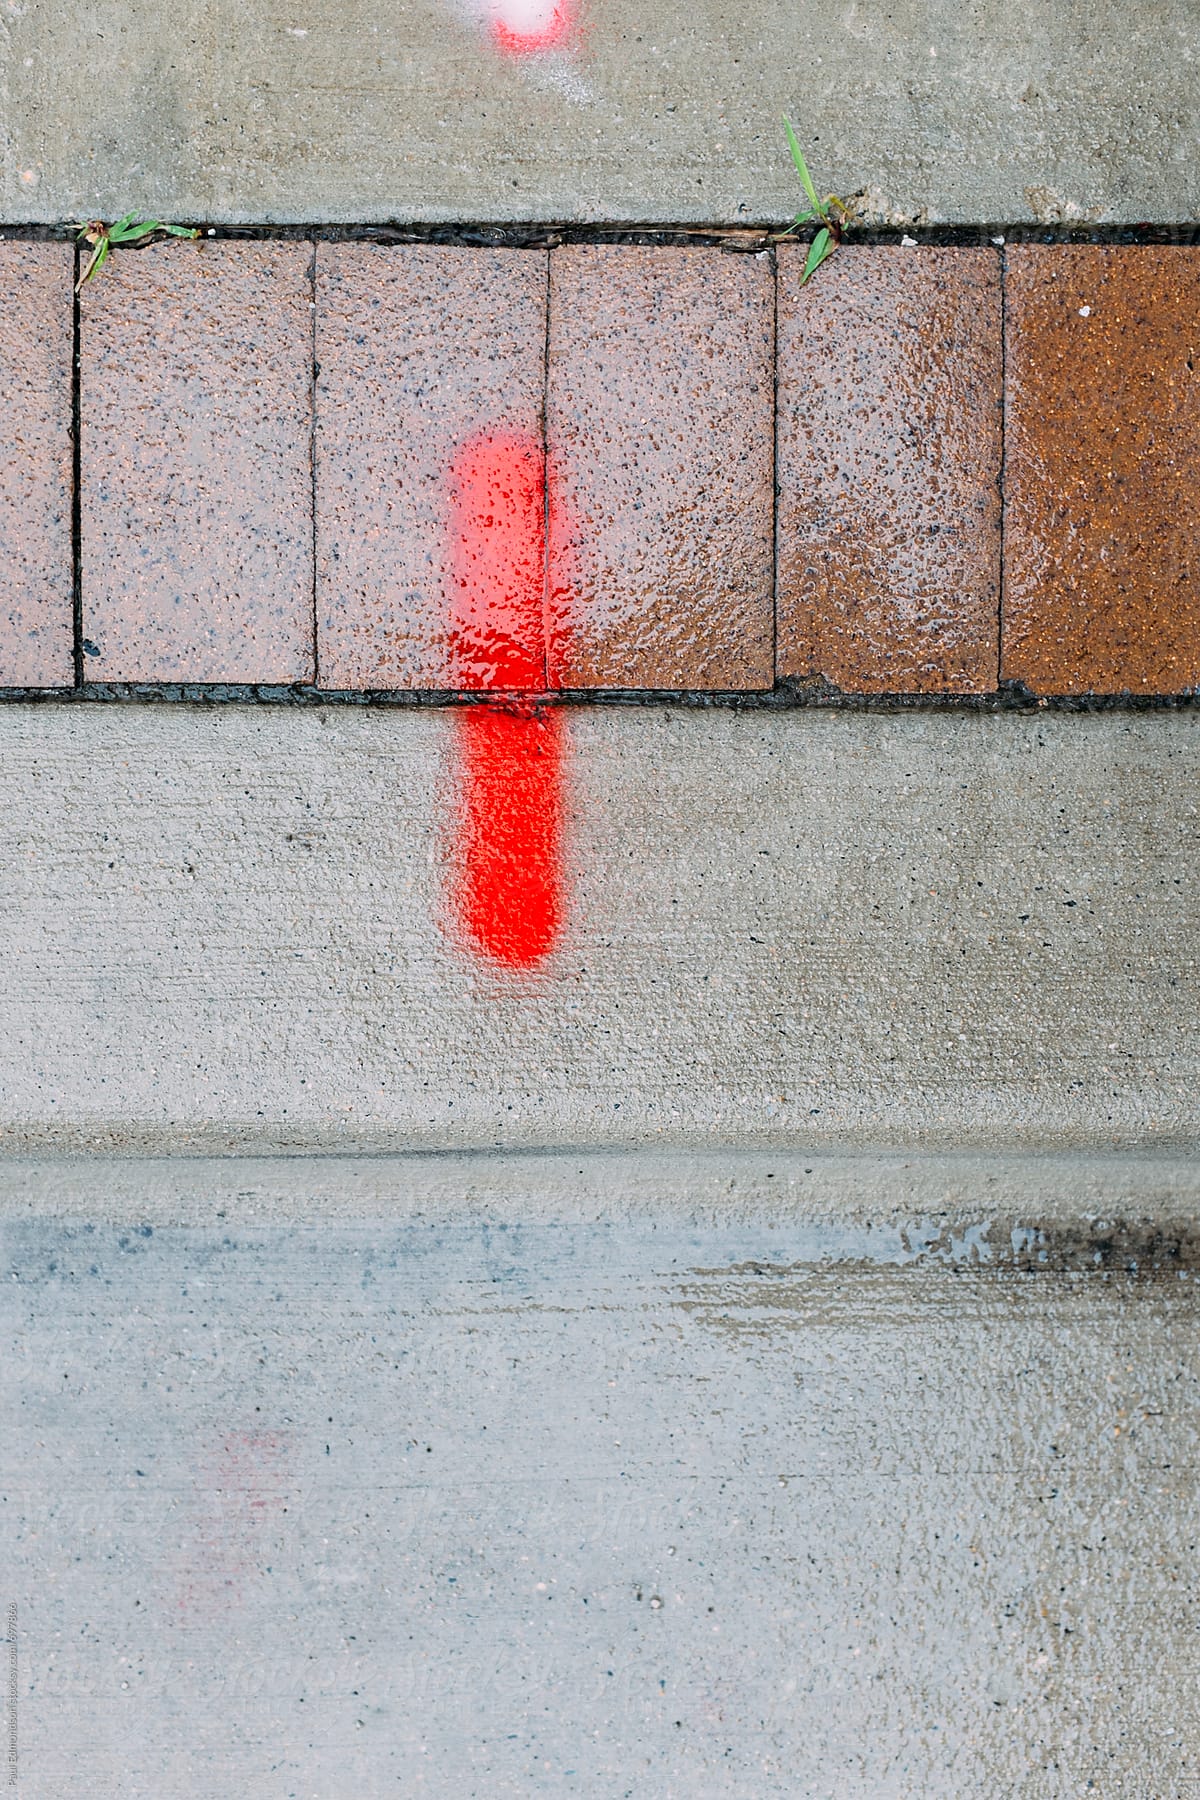 Spray paint marking on urban sidewalk and street, close up